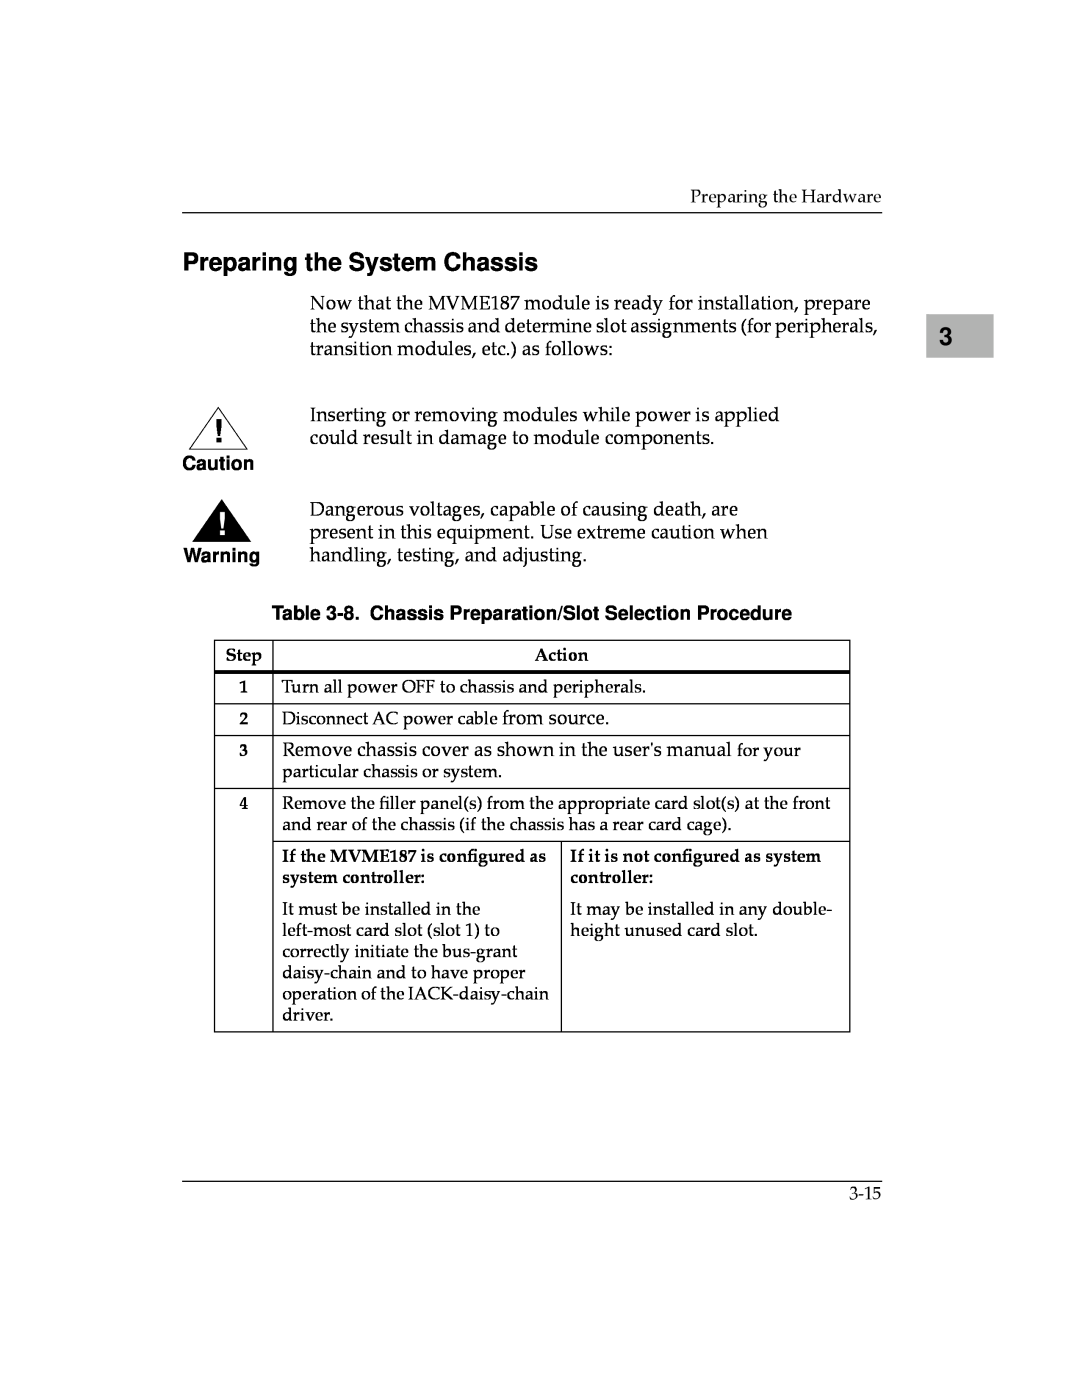 Motorola MVME187 manual Preparing the System Chassis, 8. Chassis Preparation/Slot Selection Procedure 